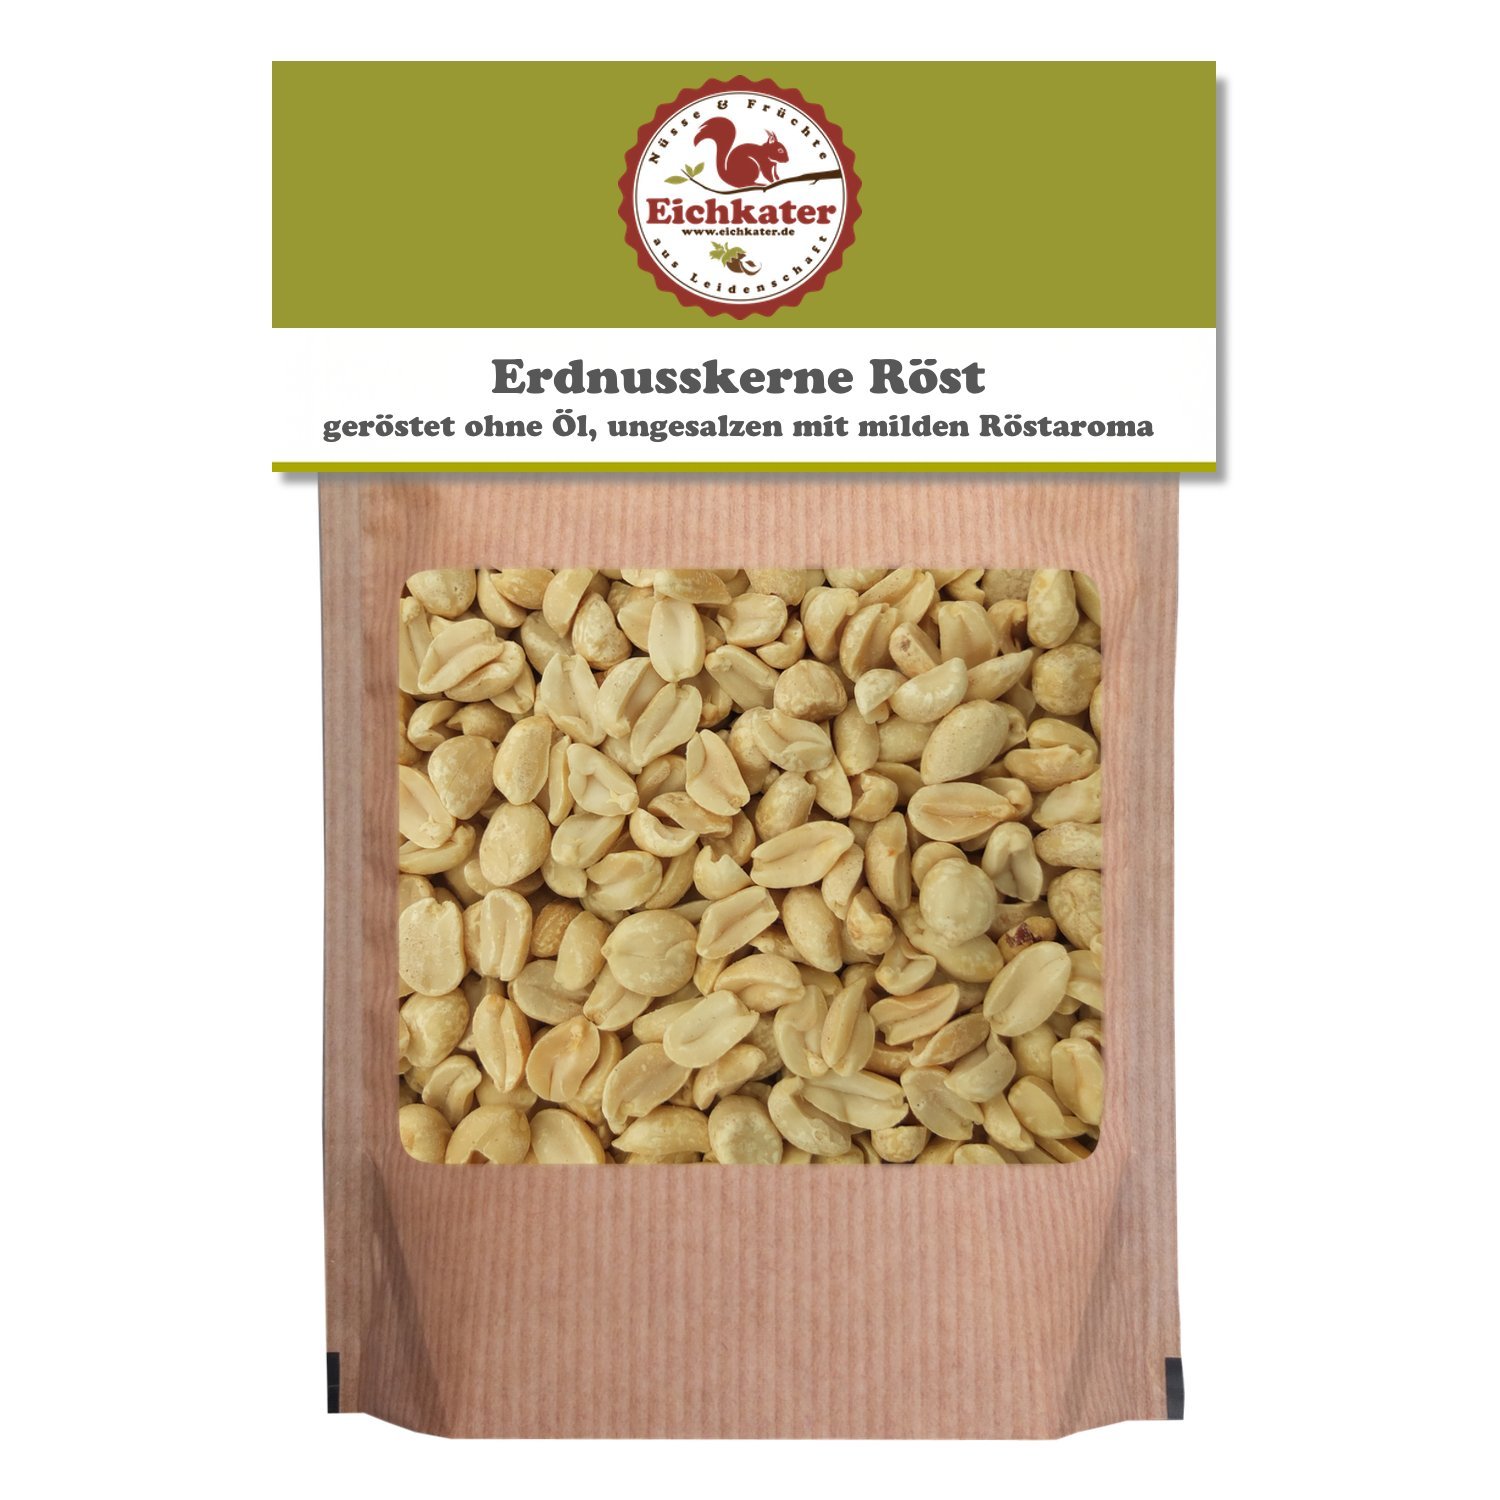 Eichkater Erdnusskerne Röst 6er-Pack (6x750 g)